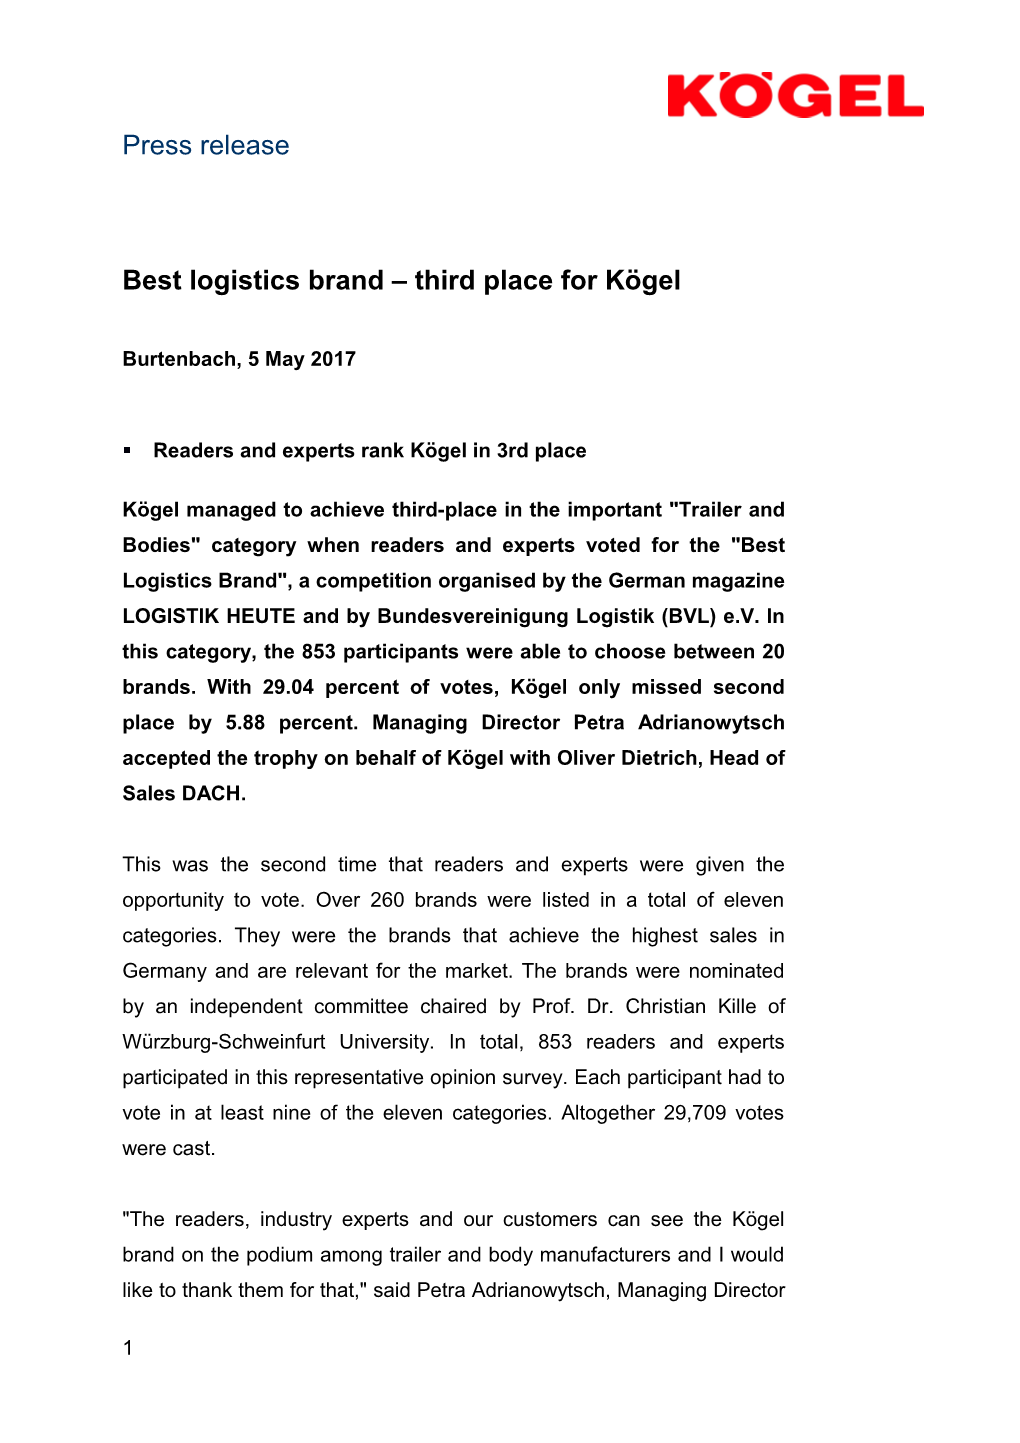 Best Logistics Brand Third Place for Kögel